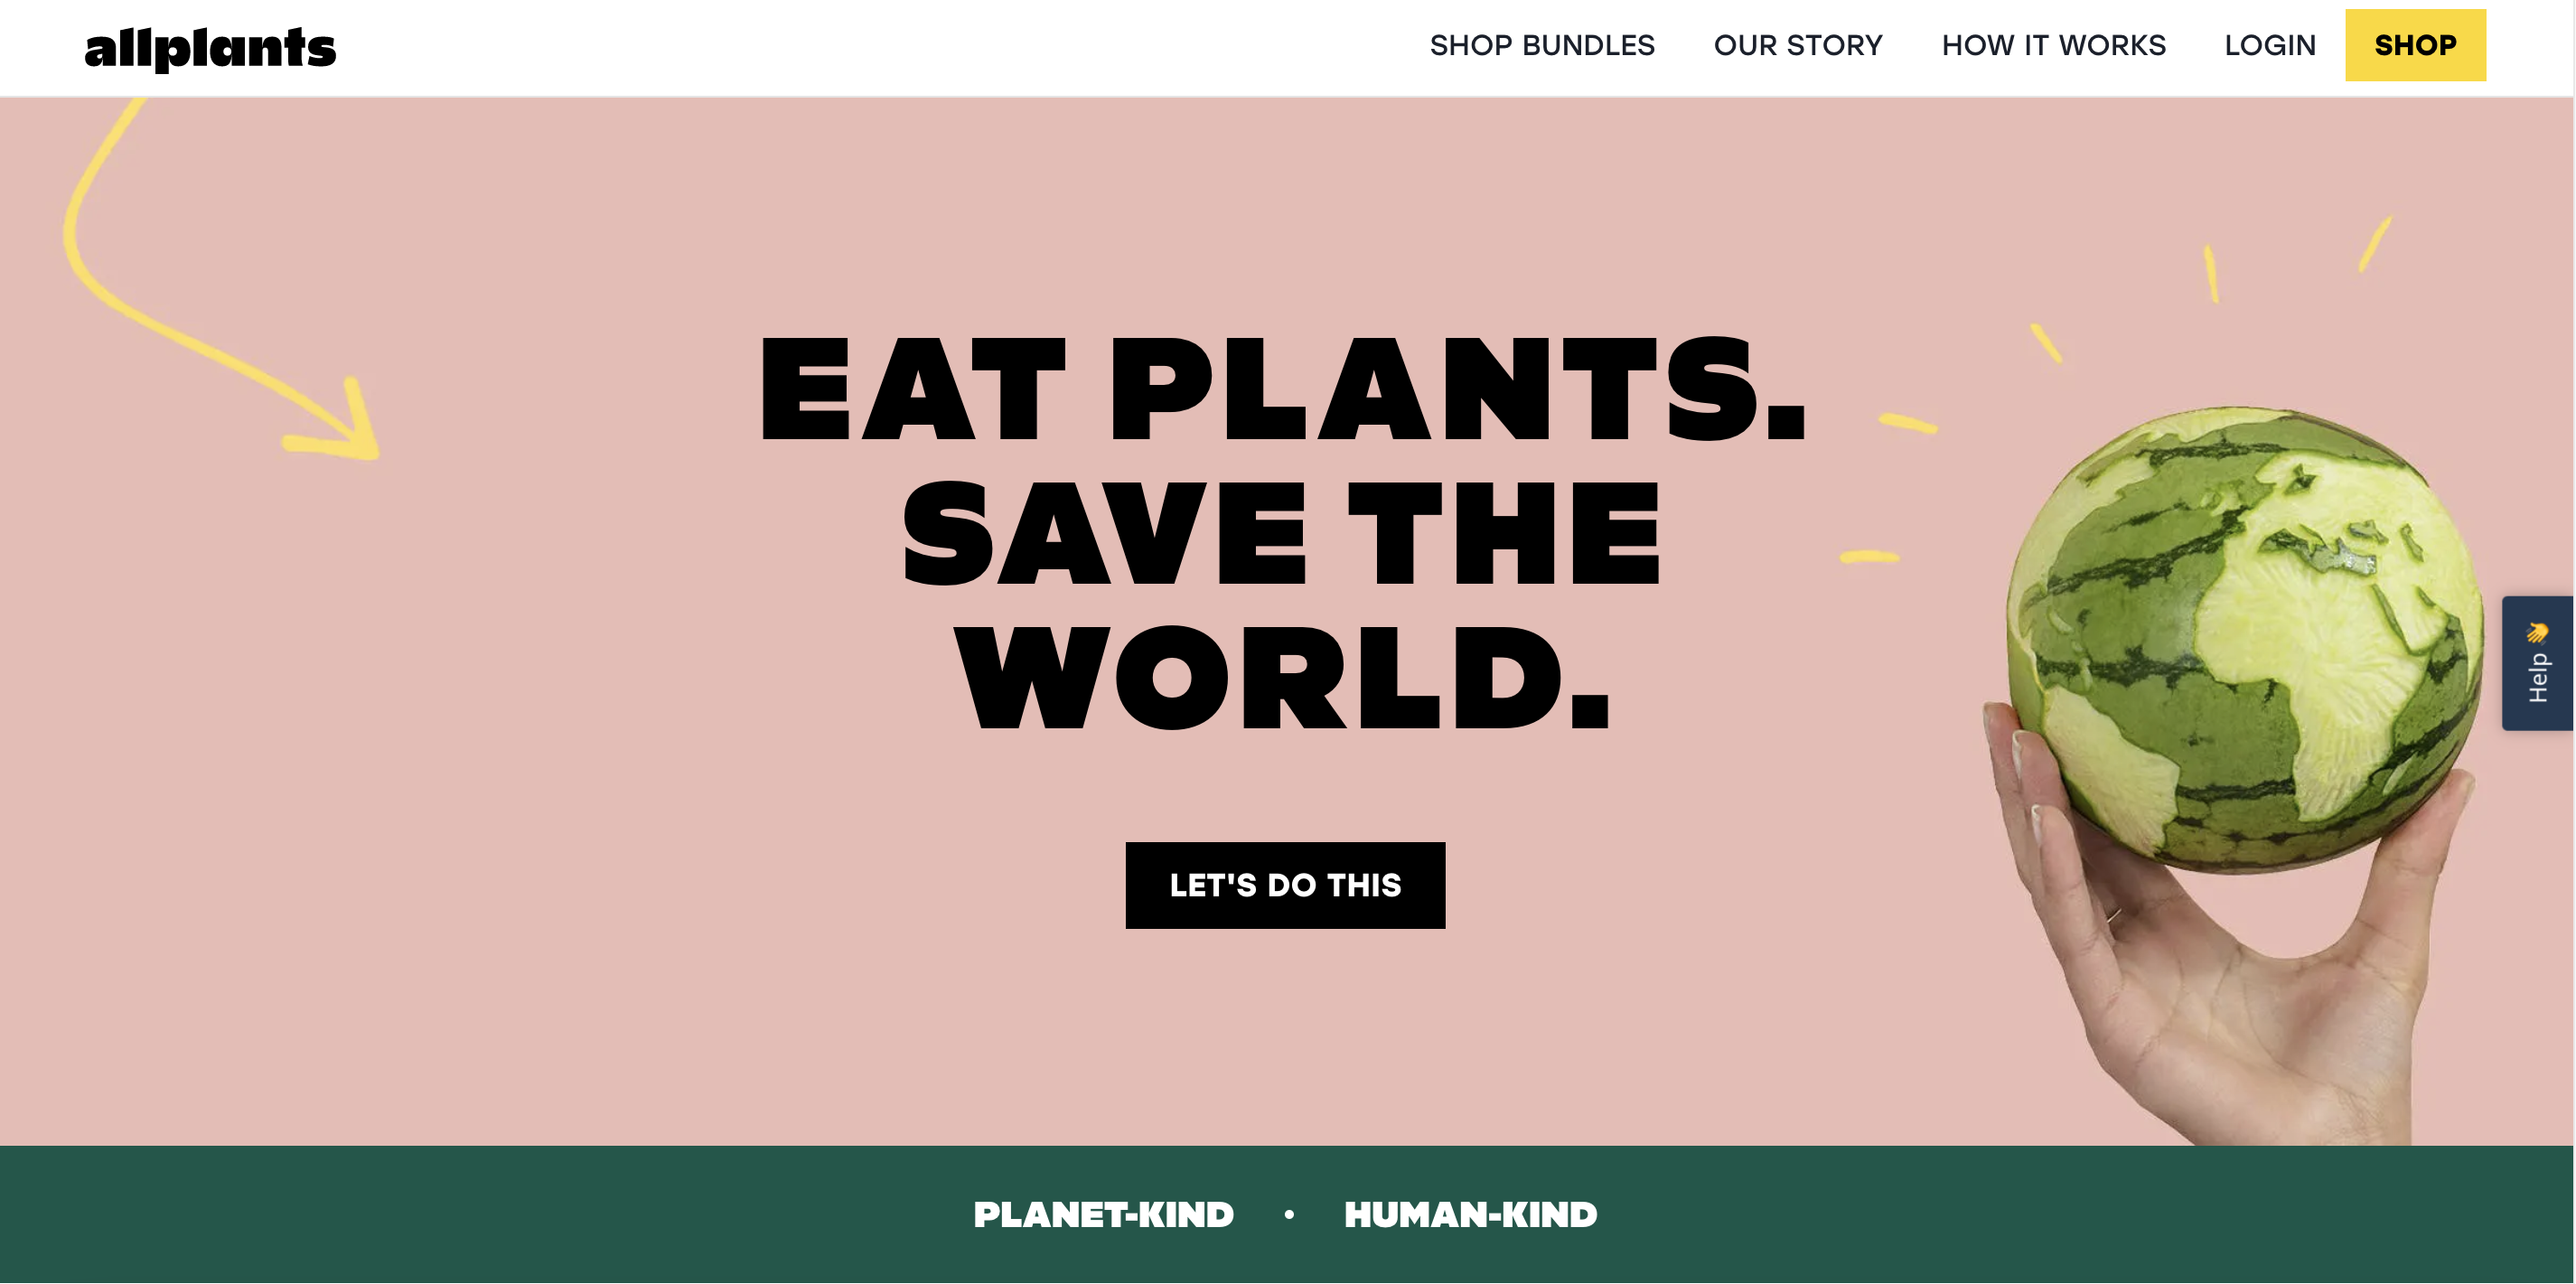 Allplants sustainable businesses